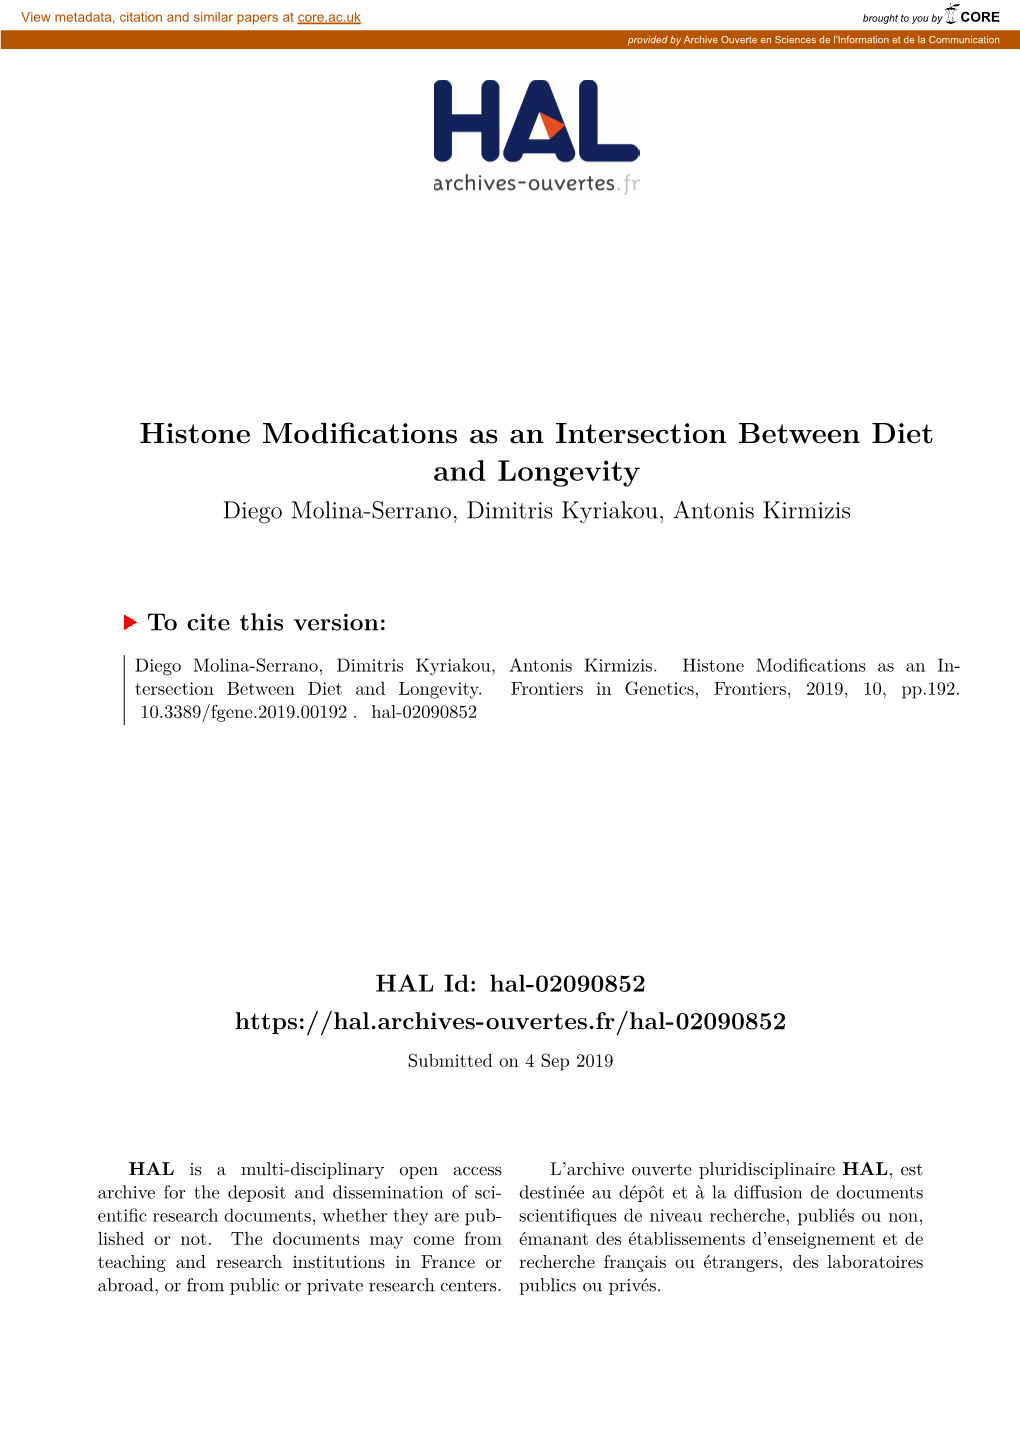 Histone Modifications As an Intersection Between Diet and Longevity Diego Molina-Serrano, Dimitris Kyriakou, Antonis Kirmizis